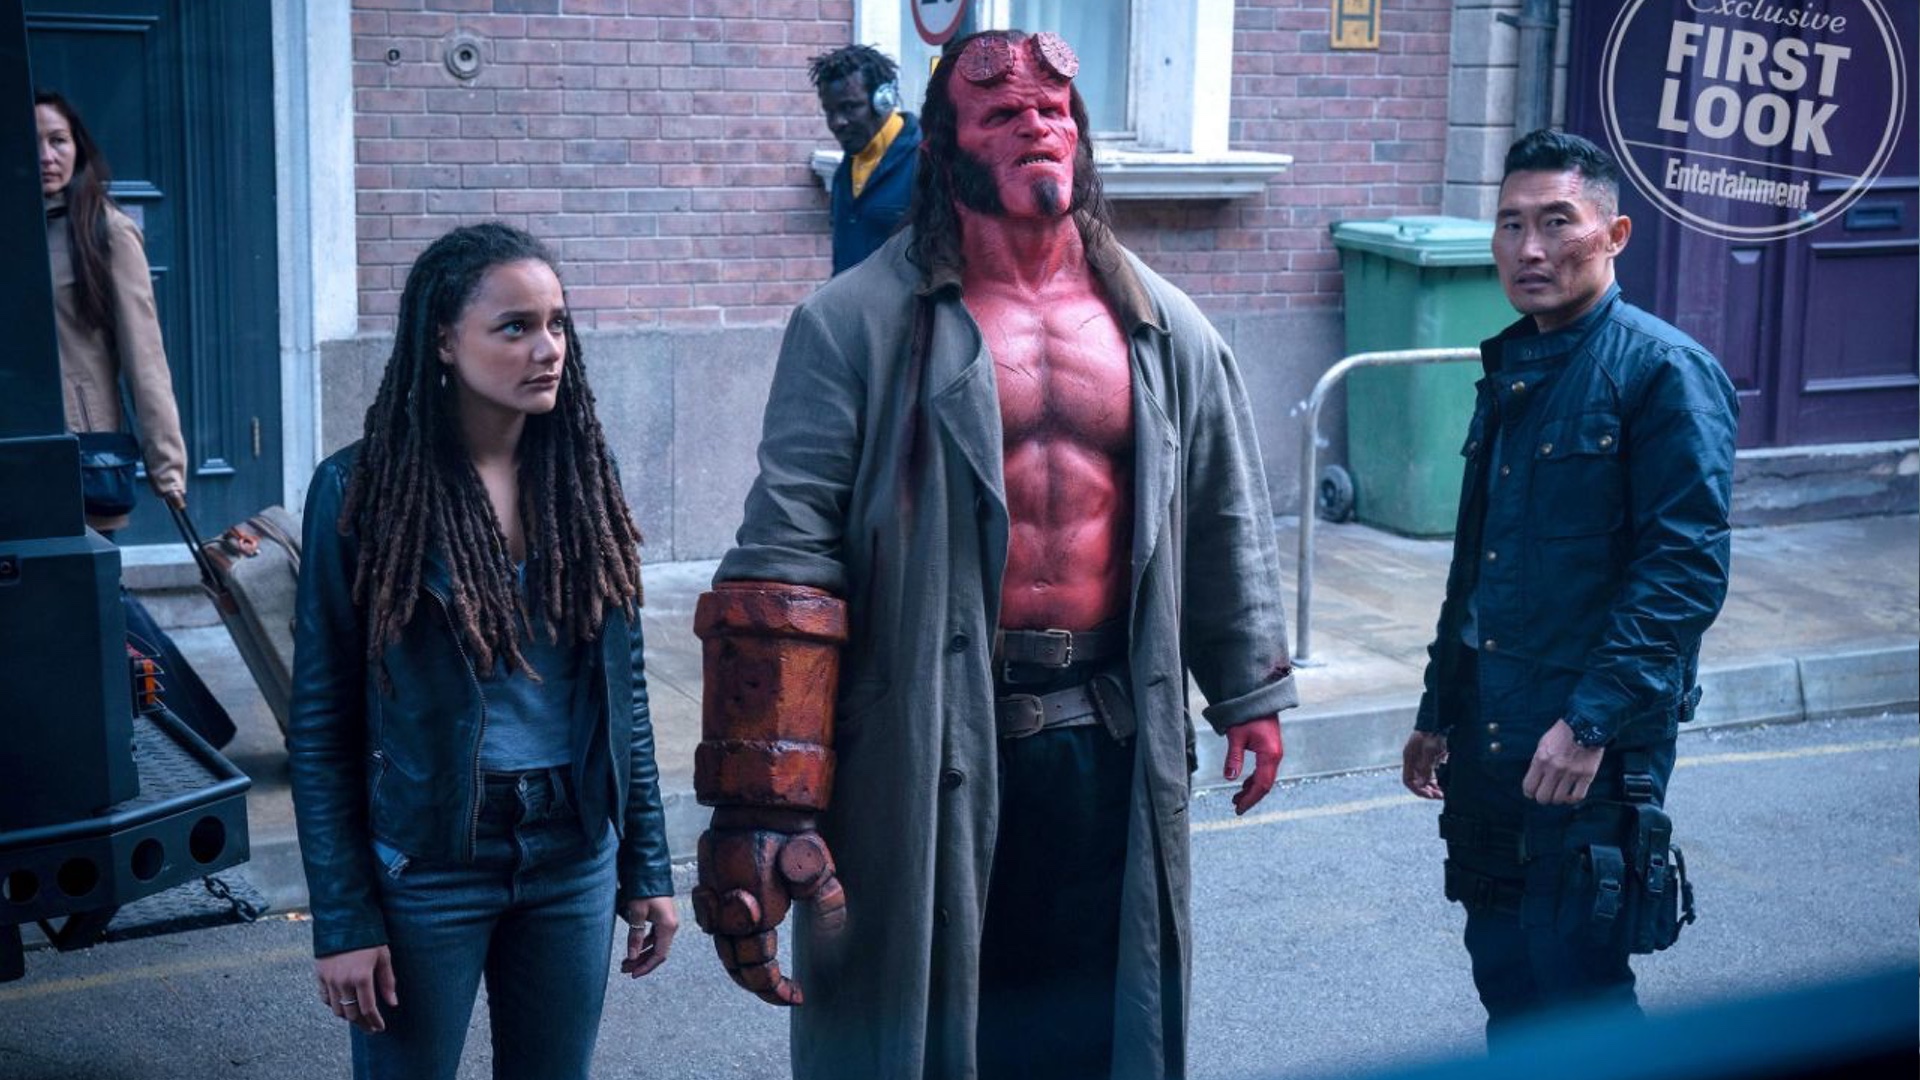 Hellboy has to save the world with the help of Alice (Sasha Lane) and Ben Daimo (Daniel Dae Kim).